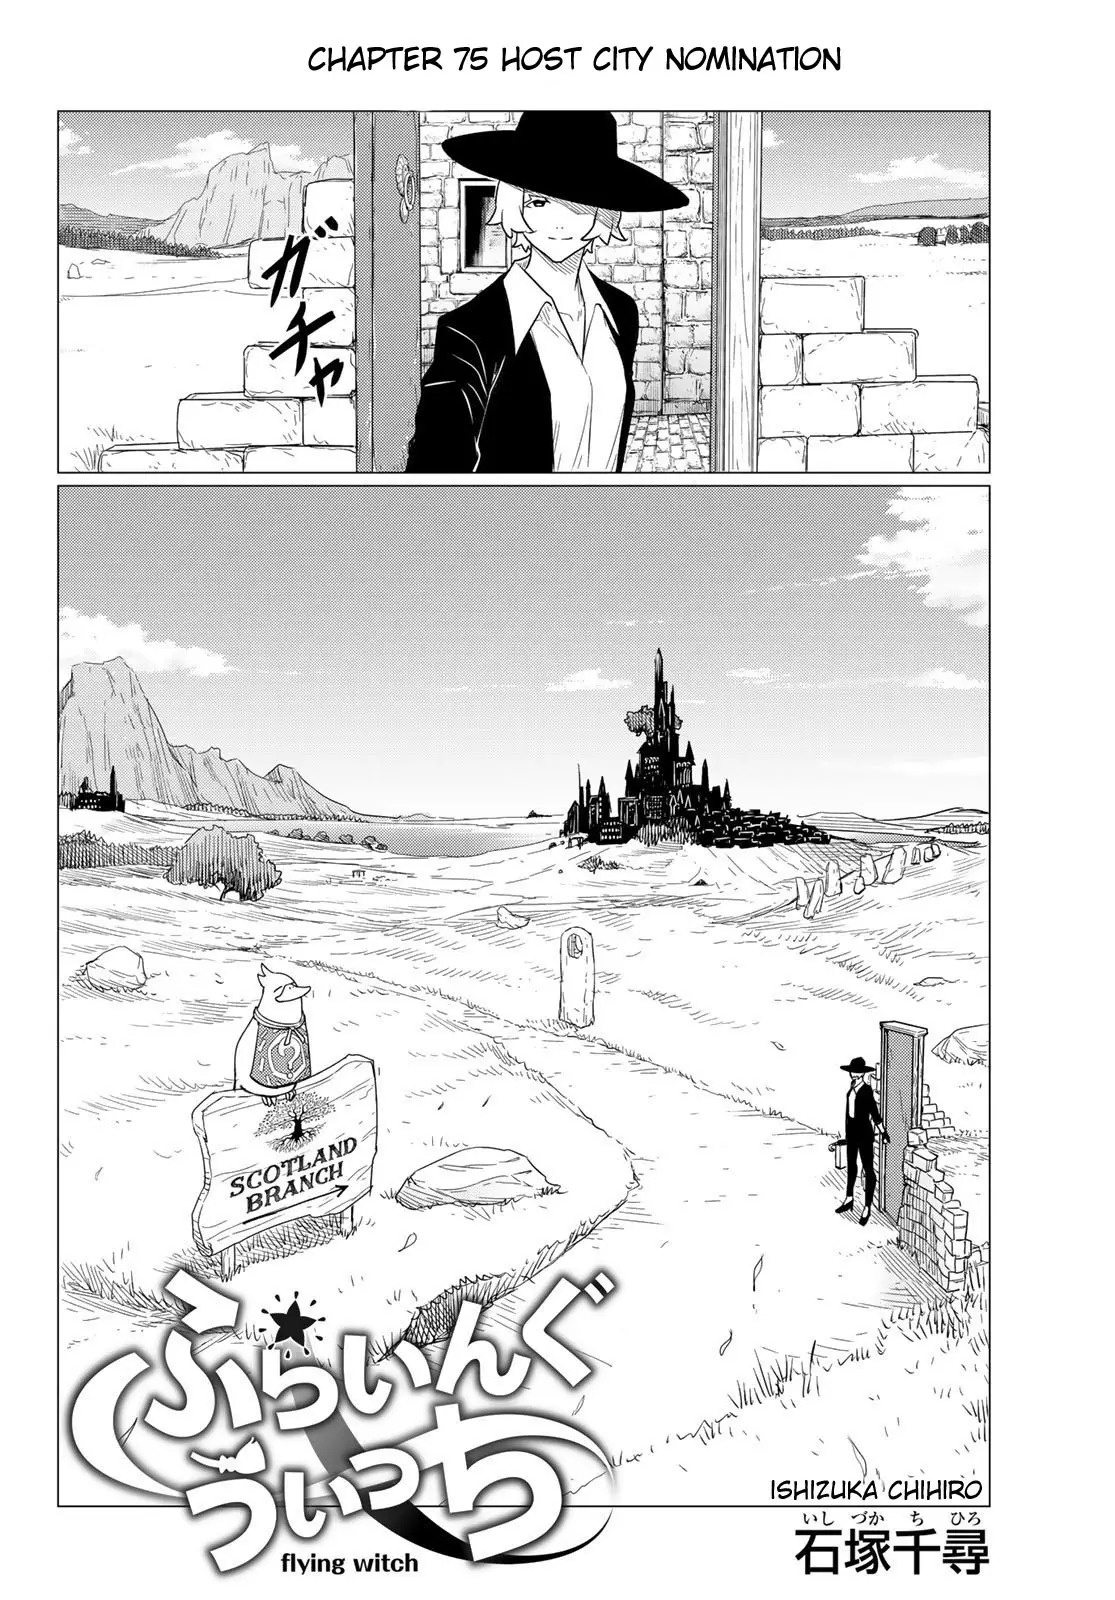 Flying Witch (ISHIZUKA Chihiro) - 75 page 2-9acab964